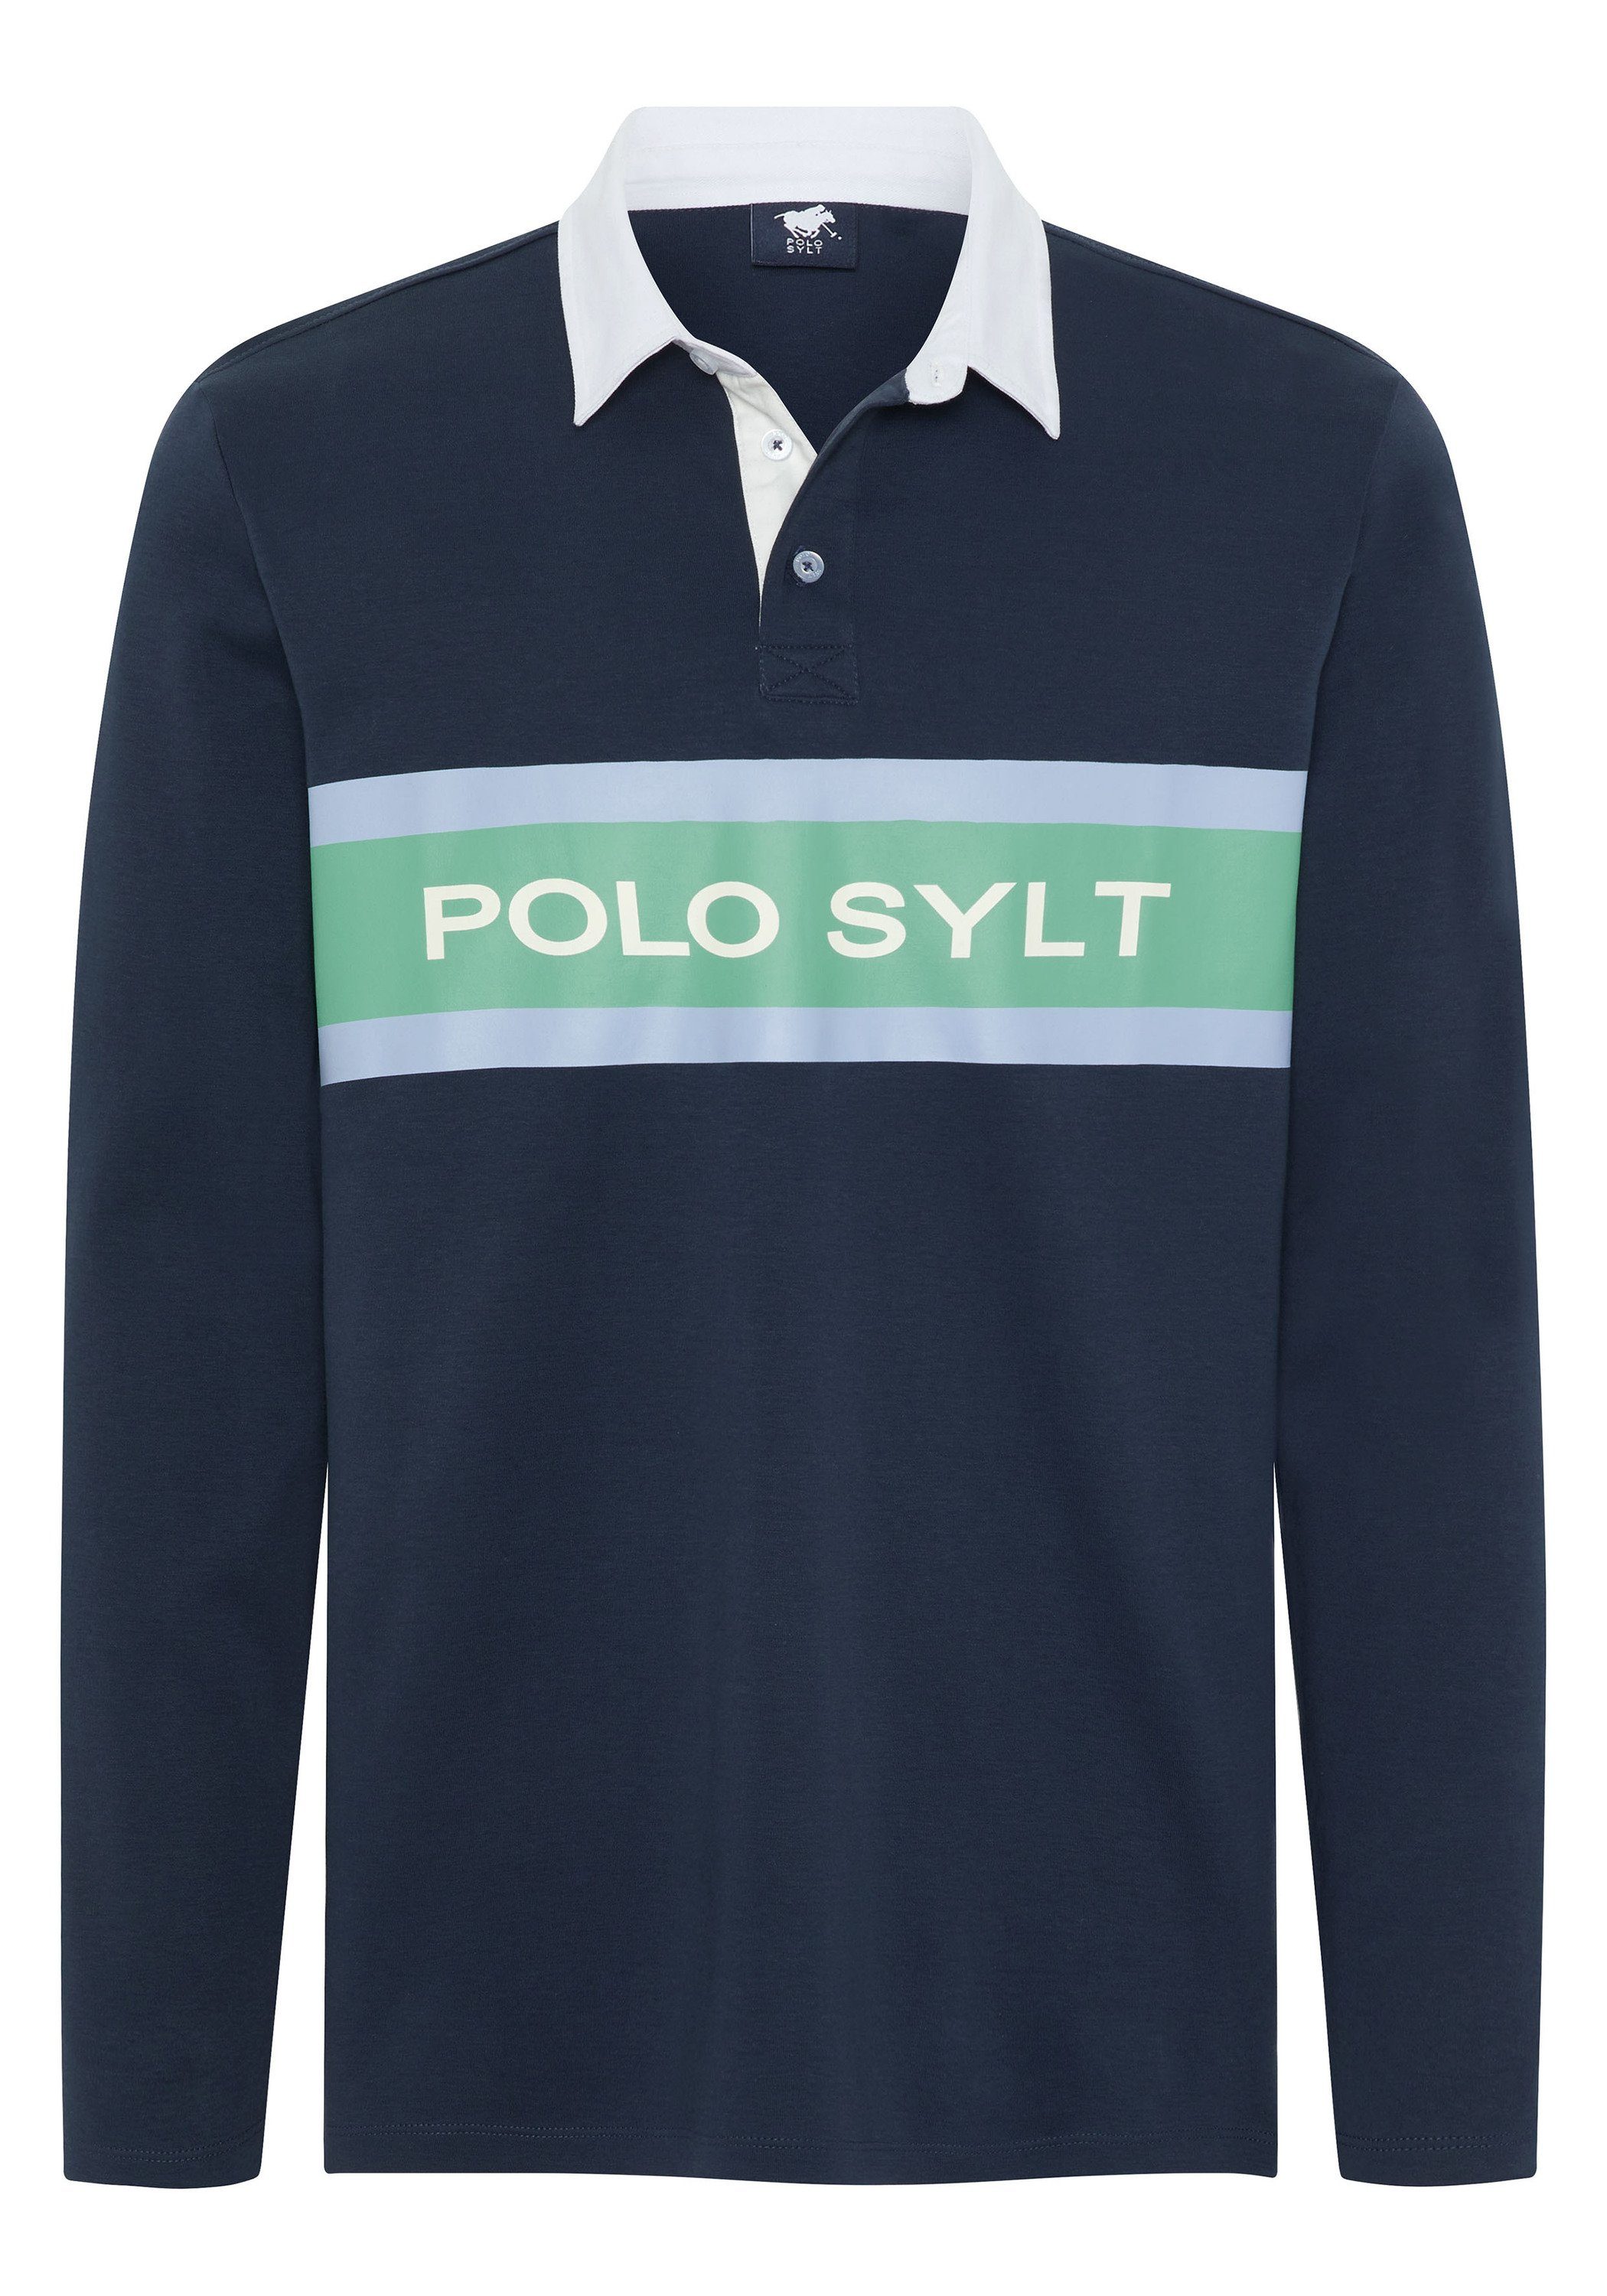 Polo Sylt Poloshirt im Label-Design 19-4010 Total Eclipse